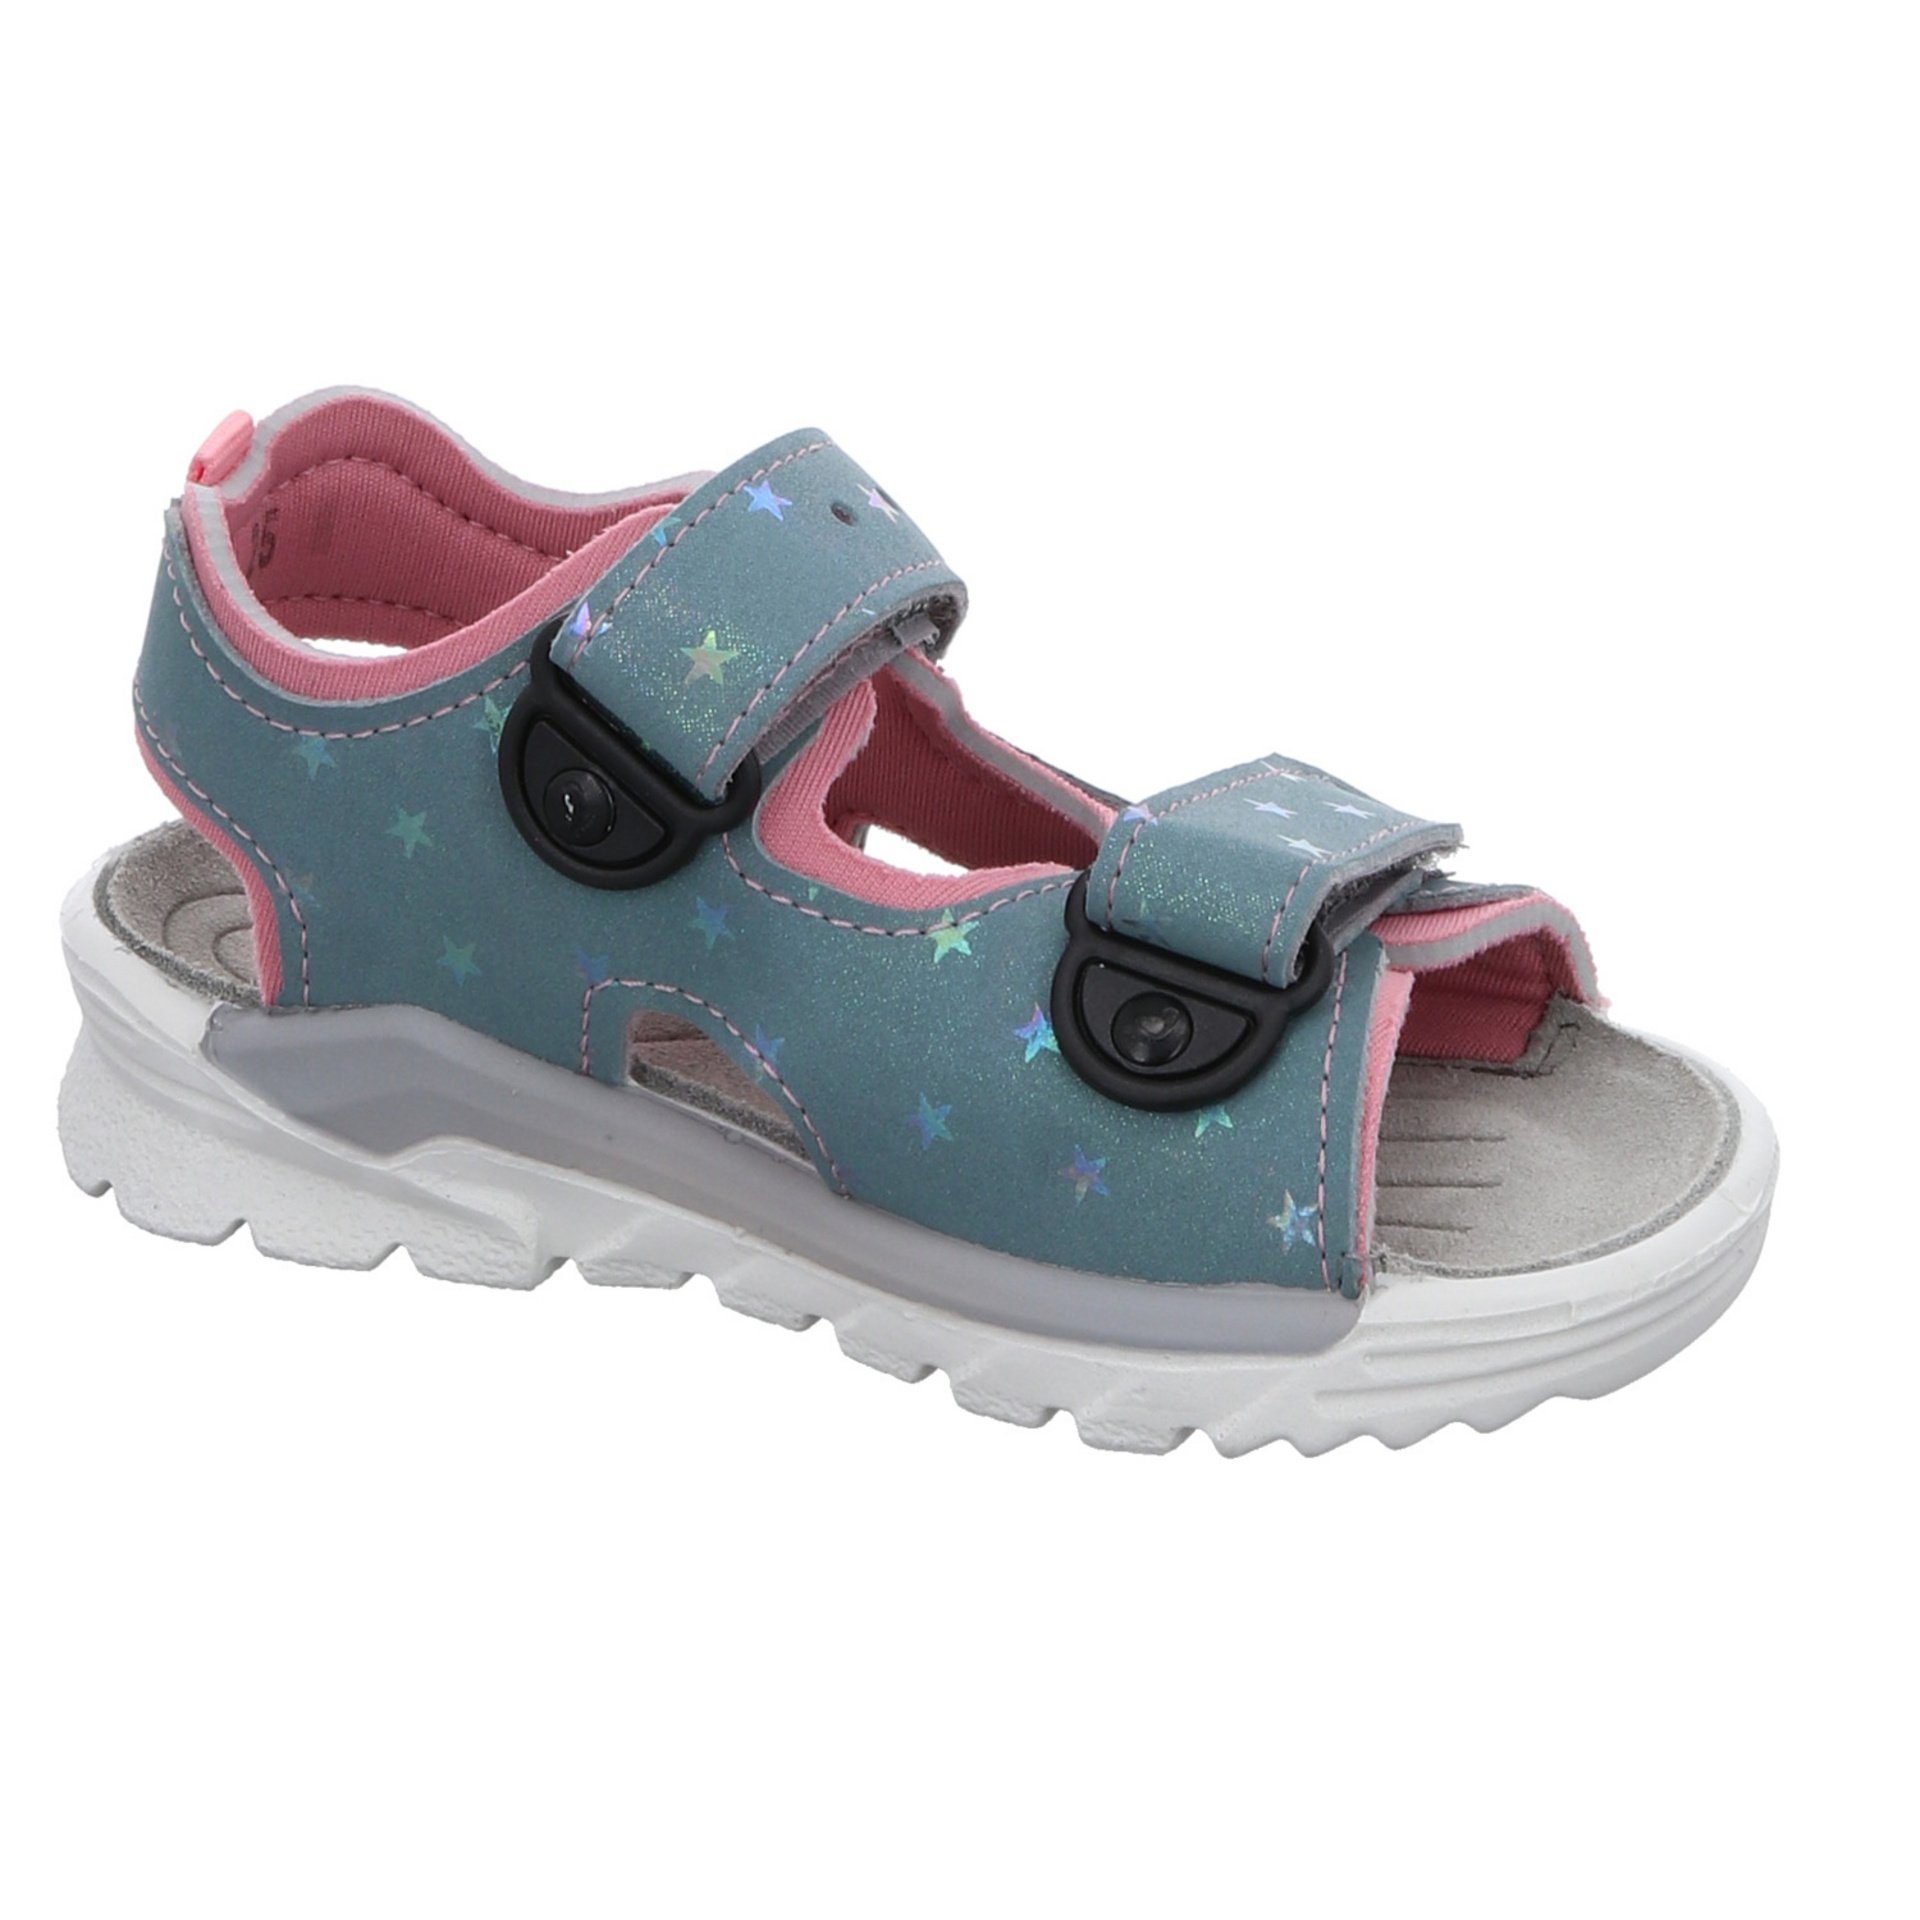 Sandale arctic/mallow Synthetikkombination Ricosta Mädchen (130) Sandale Schuhe Surf Sandalen Kinderschuhe